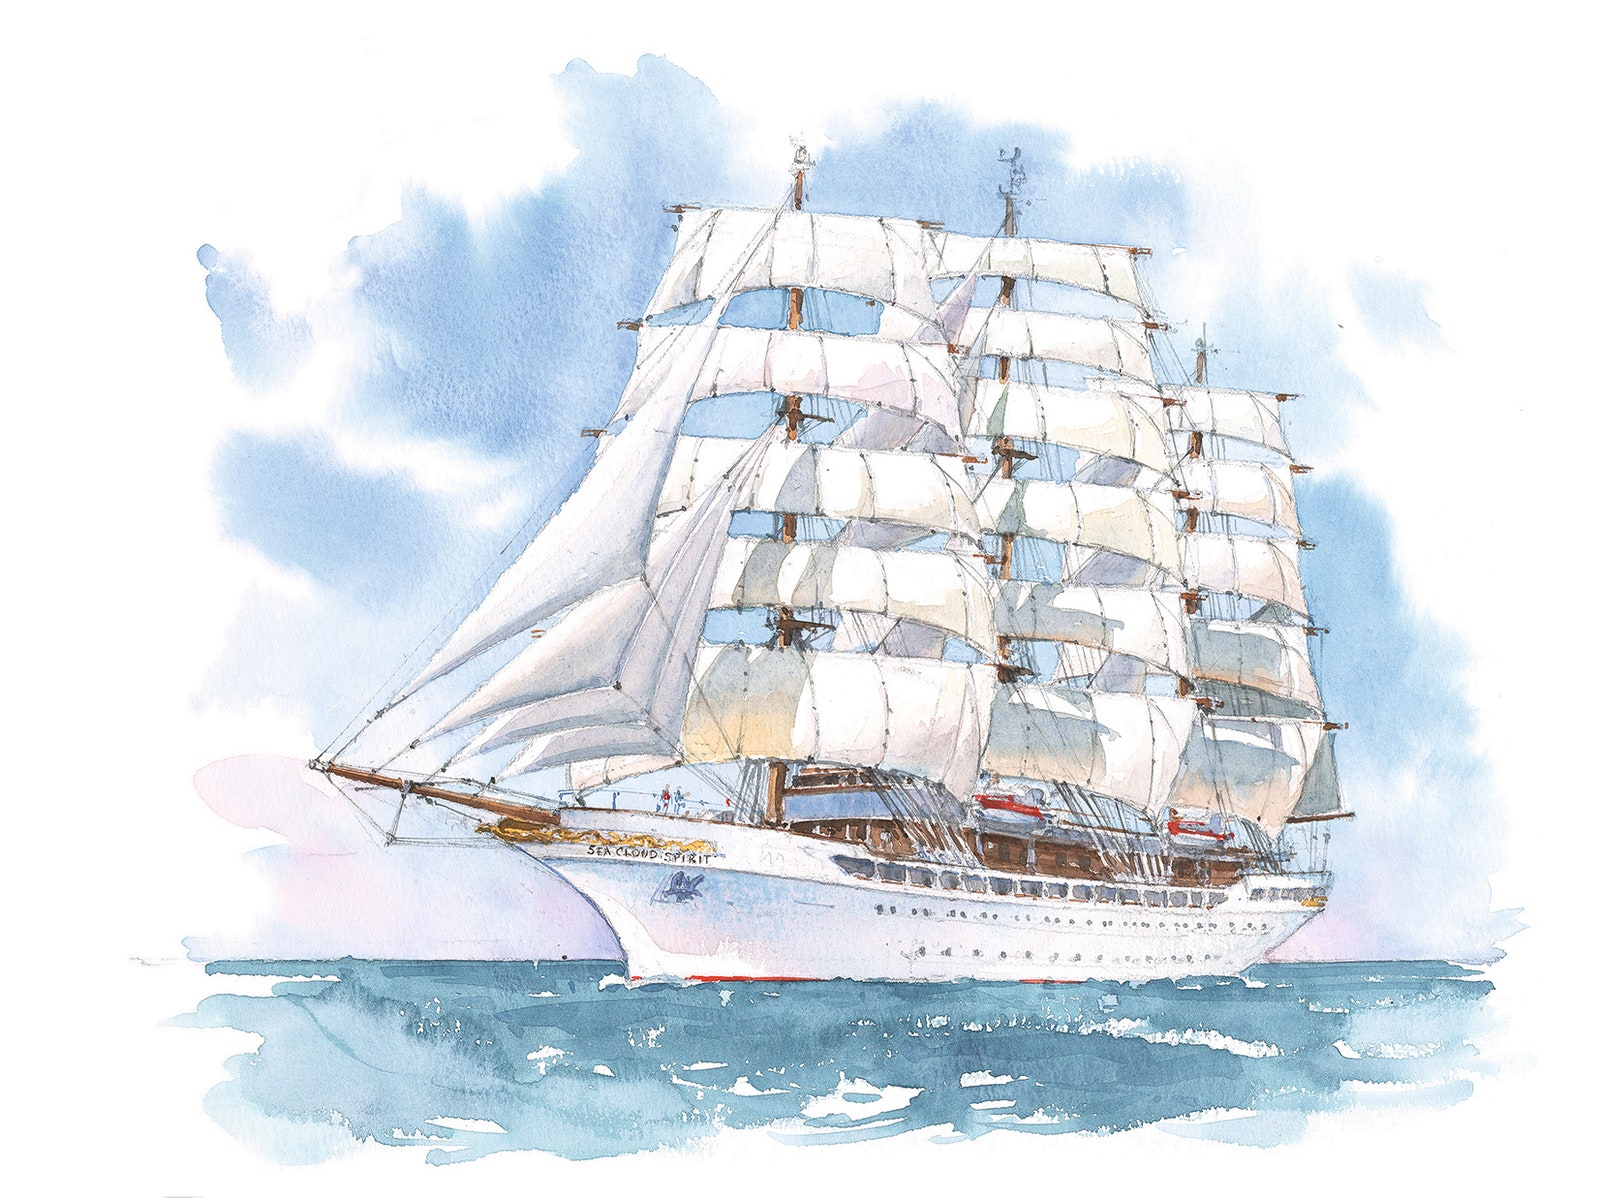 Older Sailing Ships Are Making a Comeback